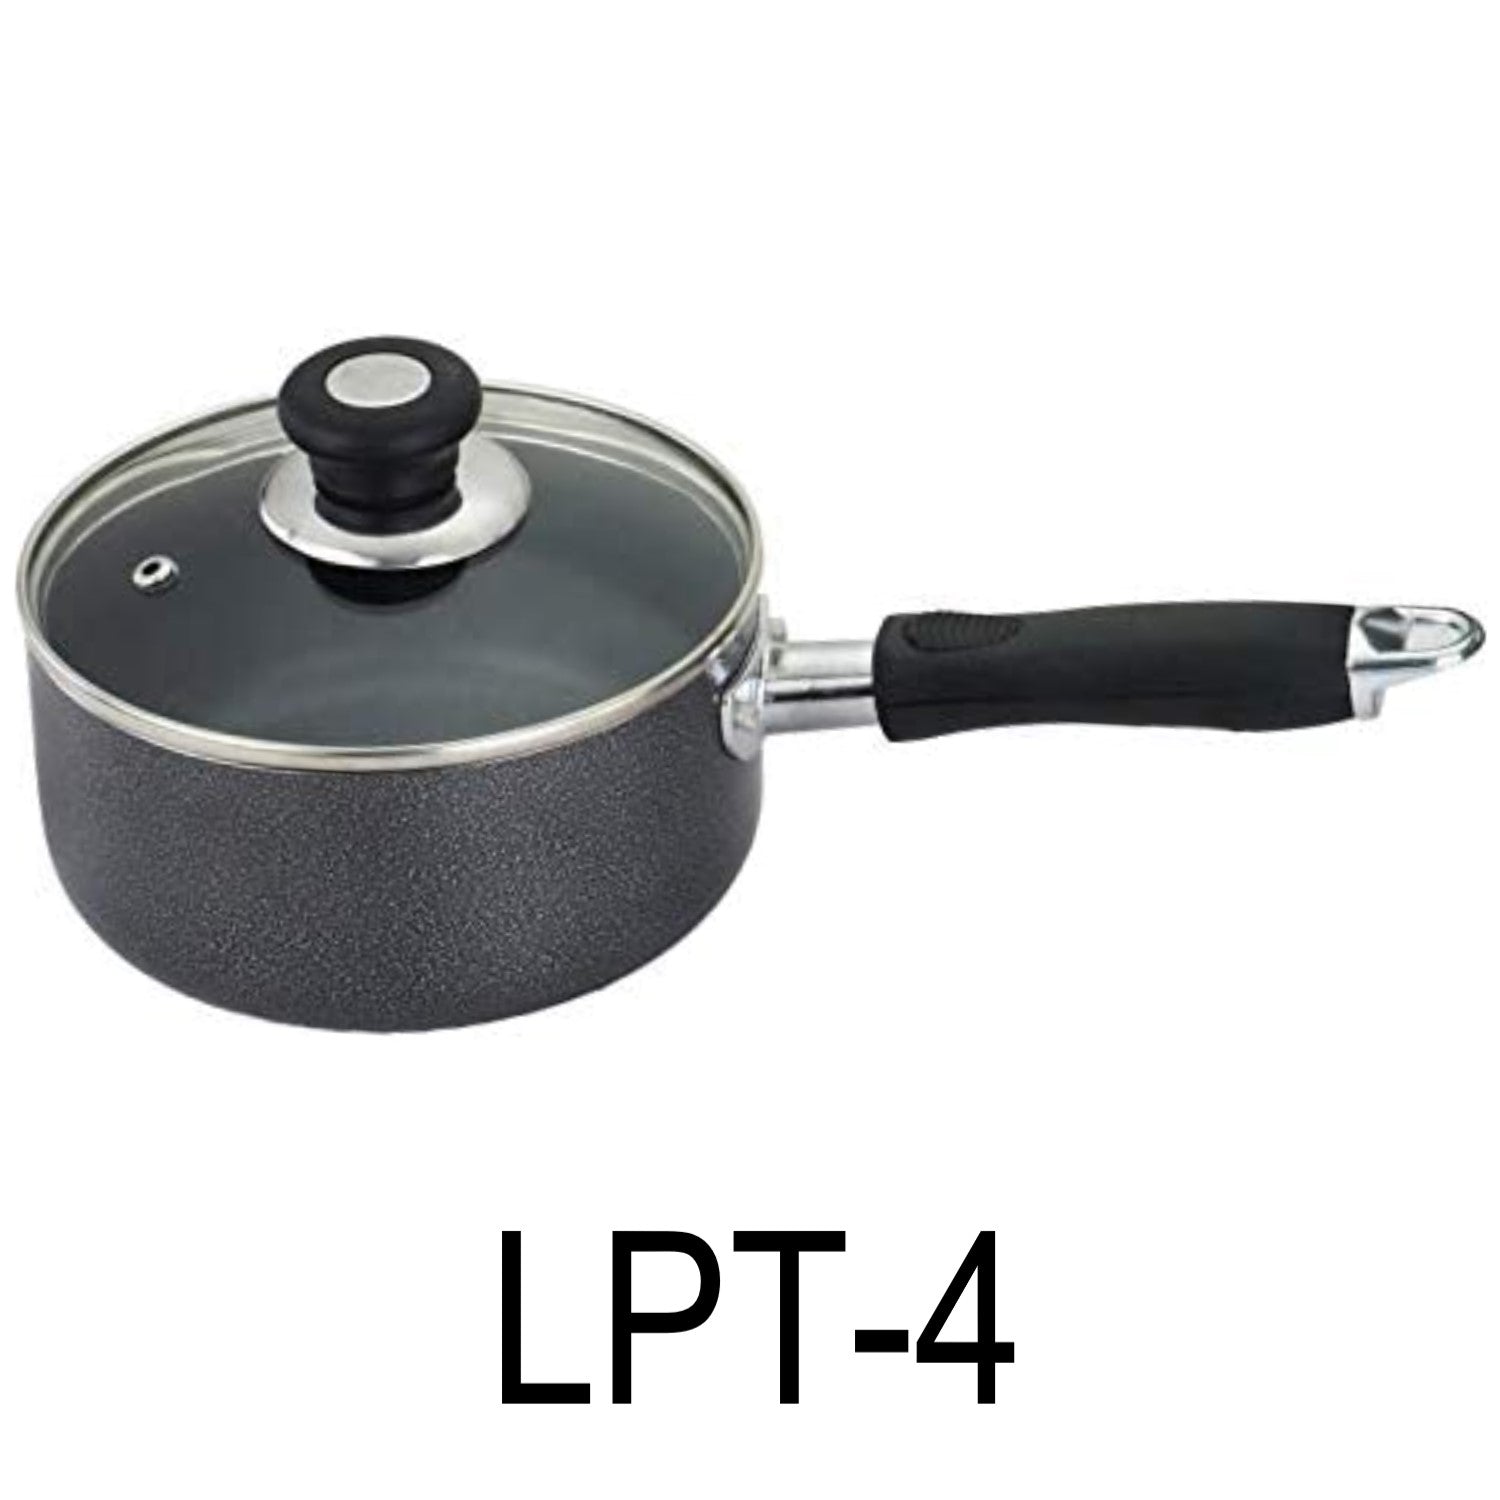 4-Quart Saucepot with Lid